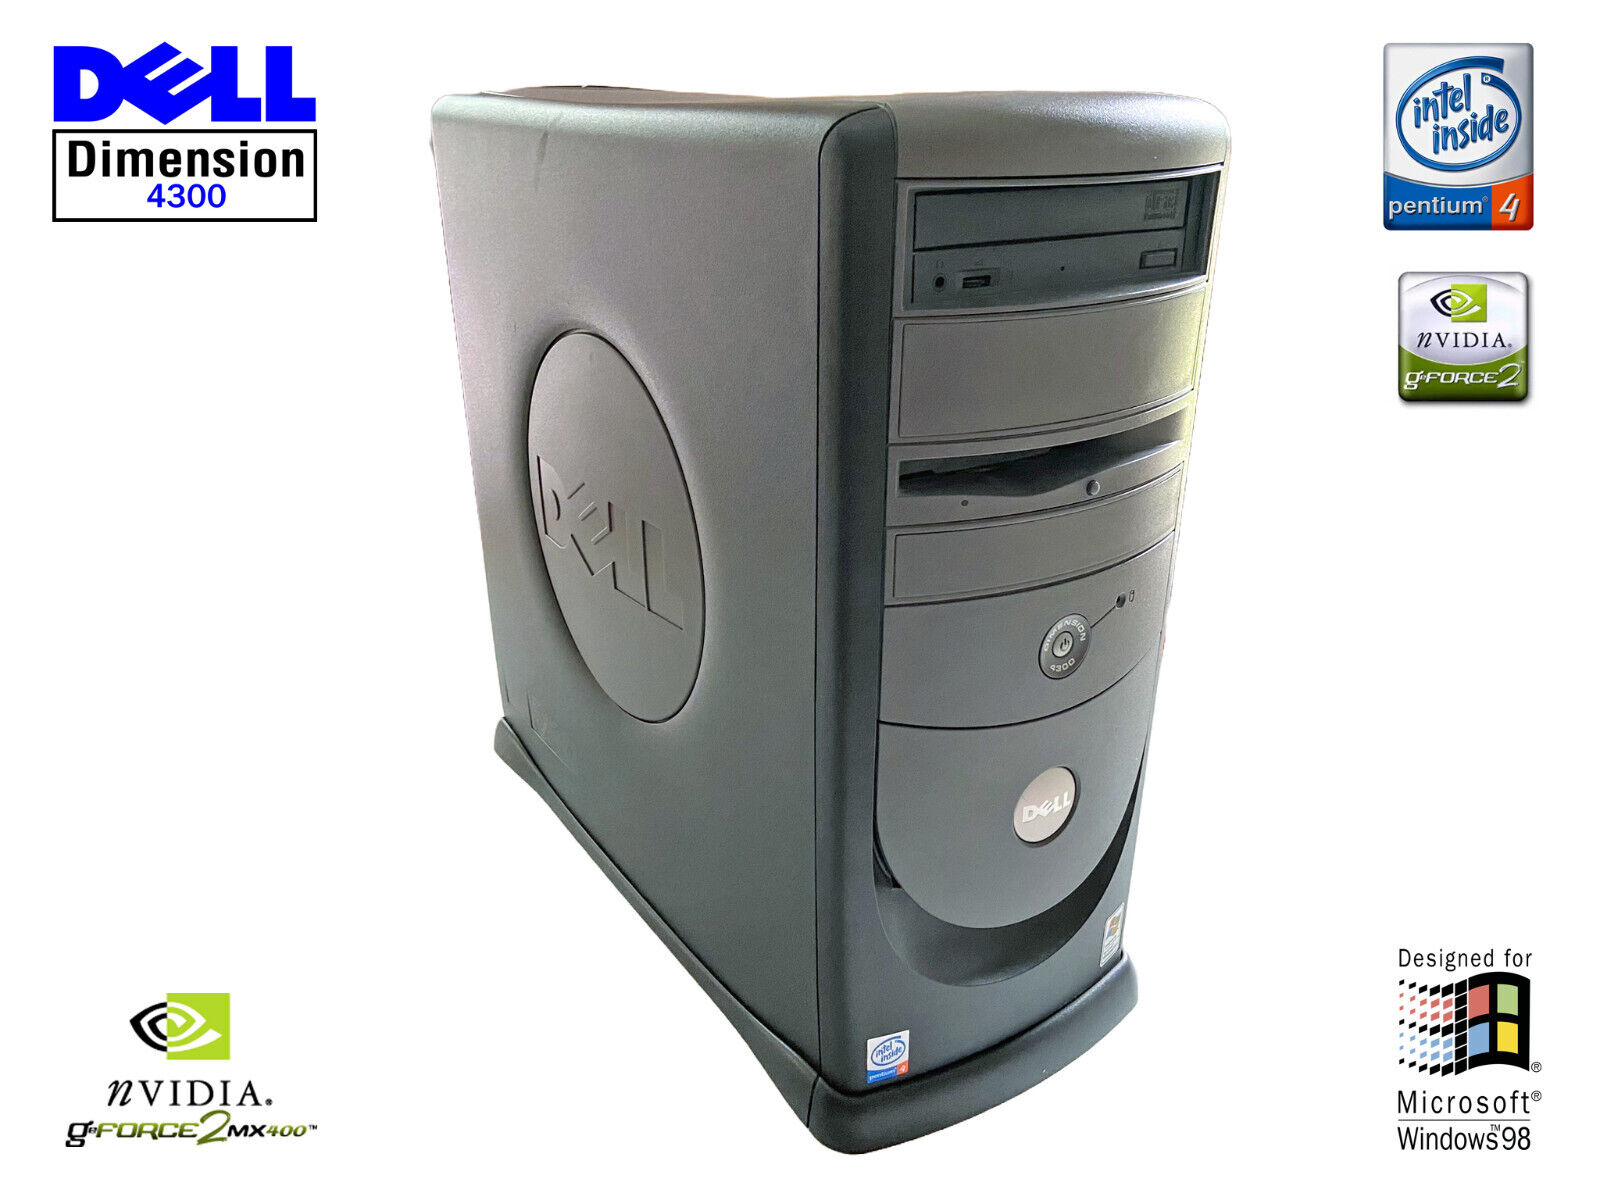 Dell DIMENSION 4300 Desktop Pentium 4 / 2.2ghz / Windows 98SE / NVIDIA GeForce 2